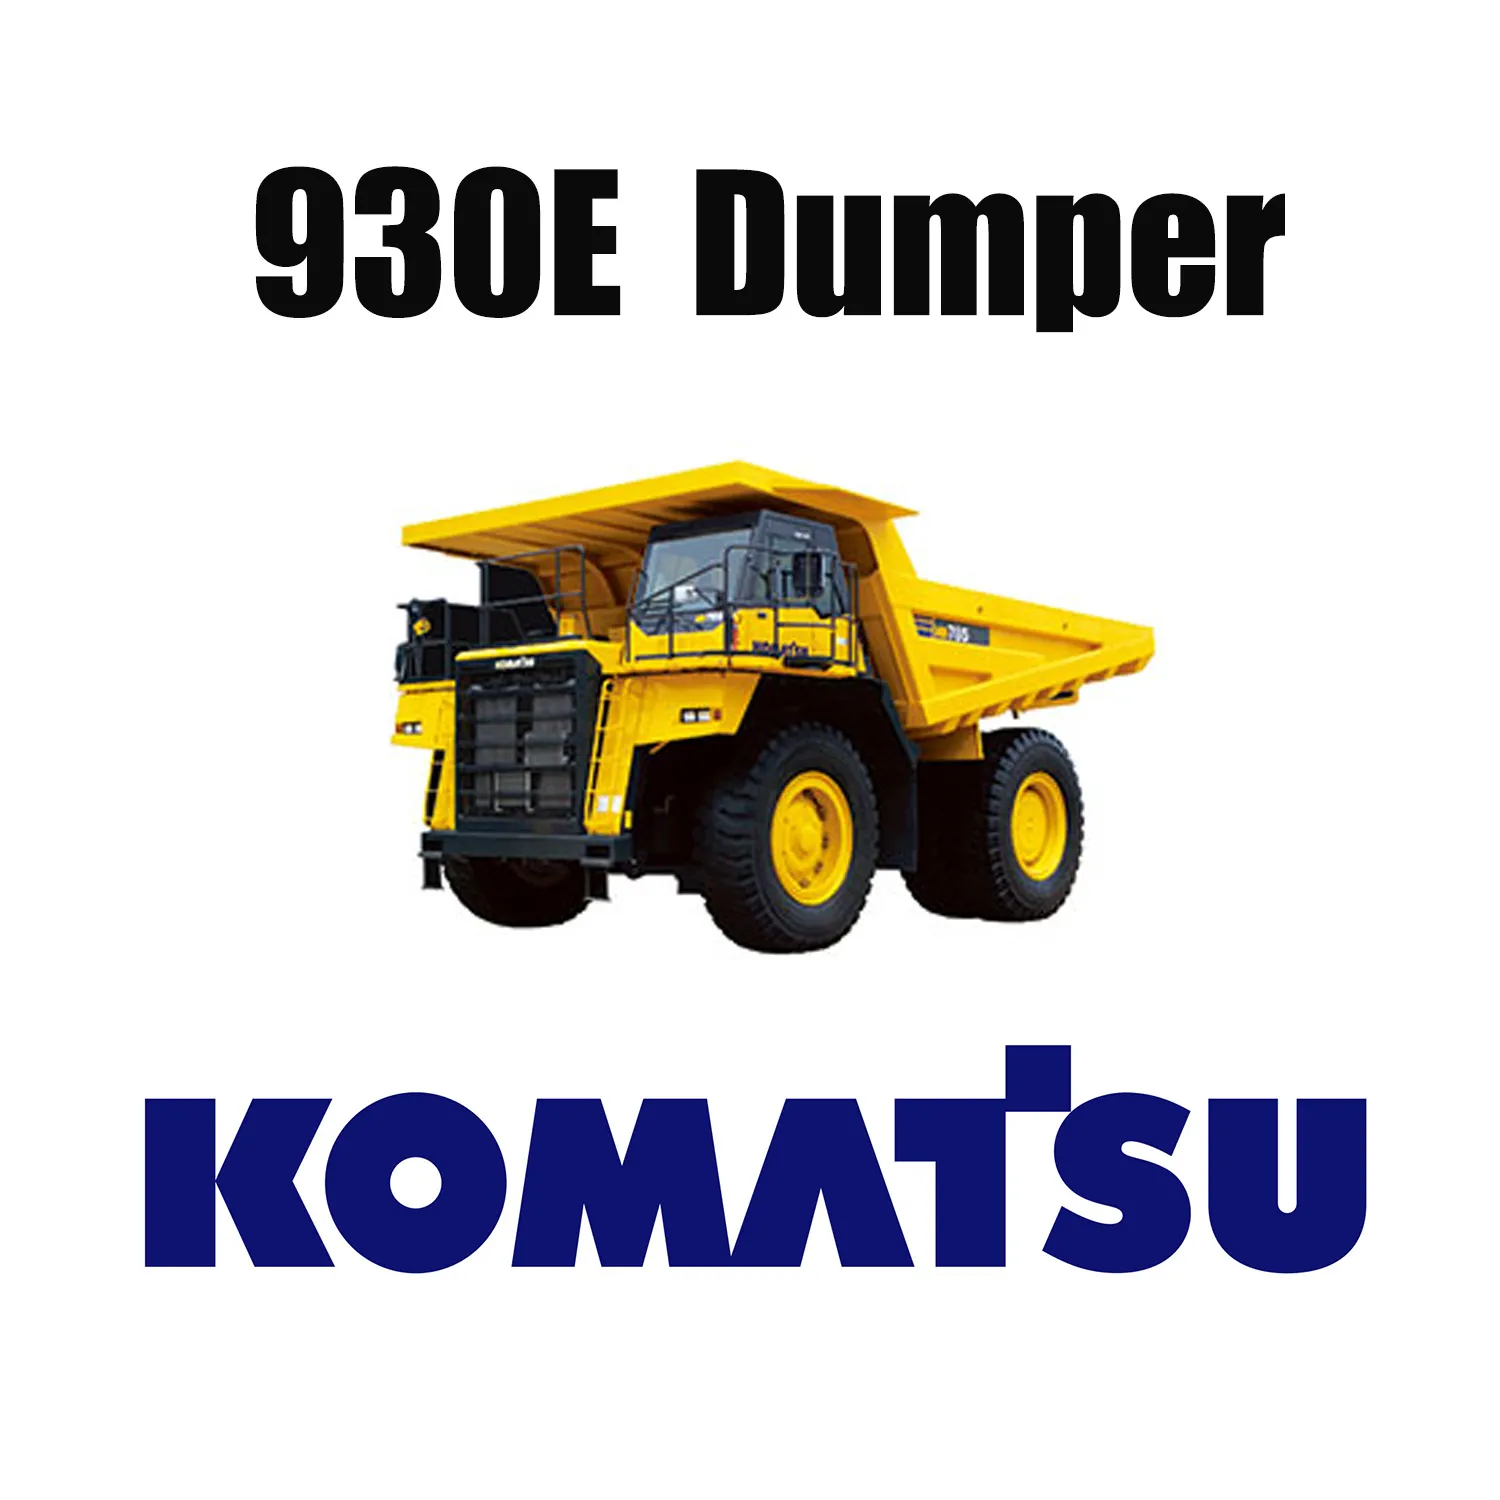 53/80R63 Ban Pertambangan Permukaan Jalan yang diterapkan untuk KOMATSU 930E